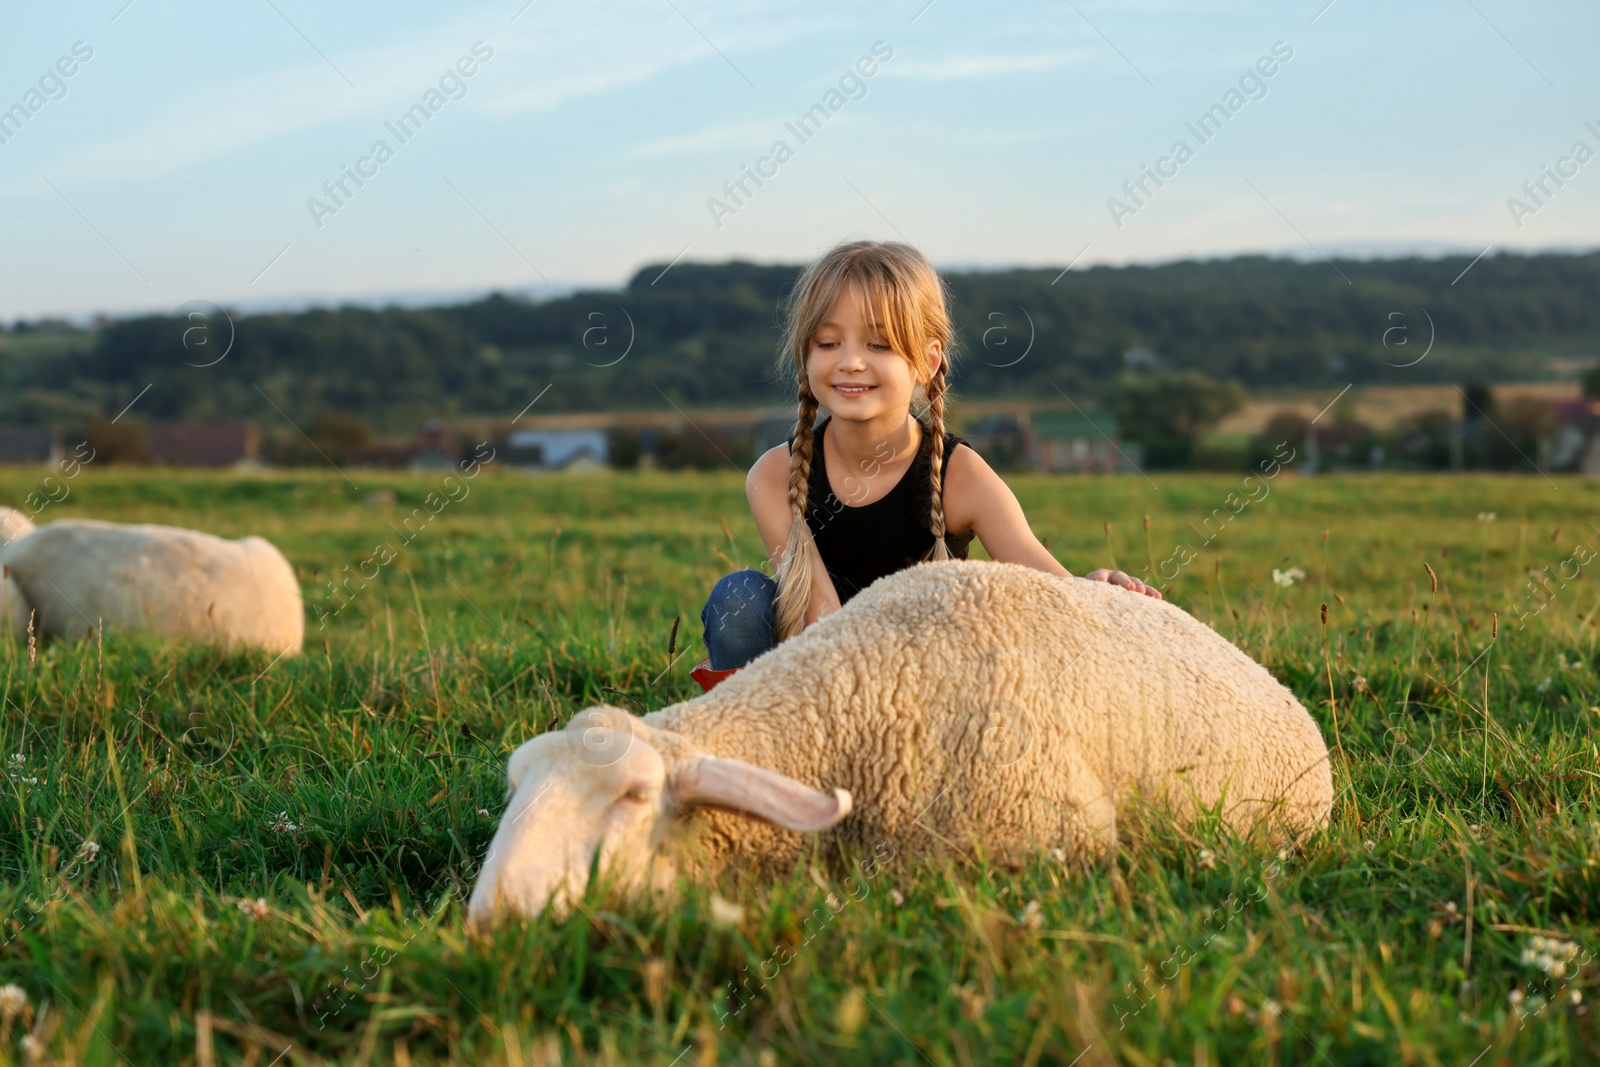 Photo of Girl with sheep on pasture. Farm animal